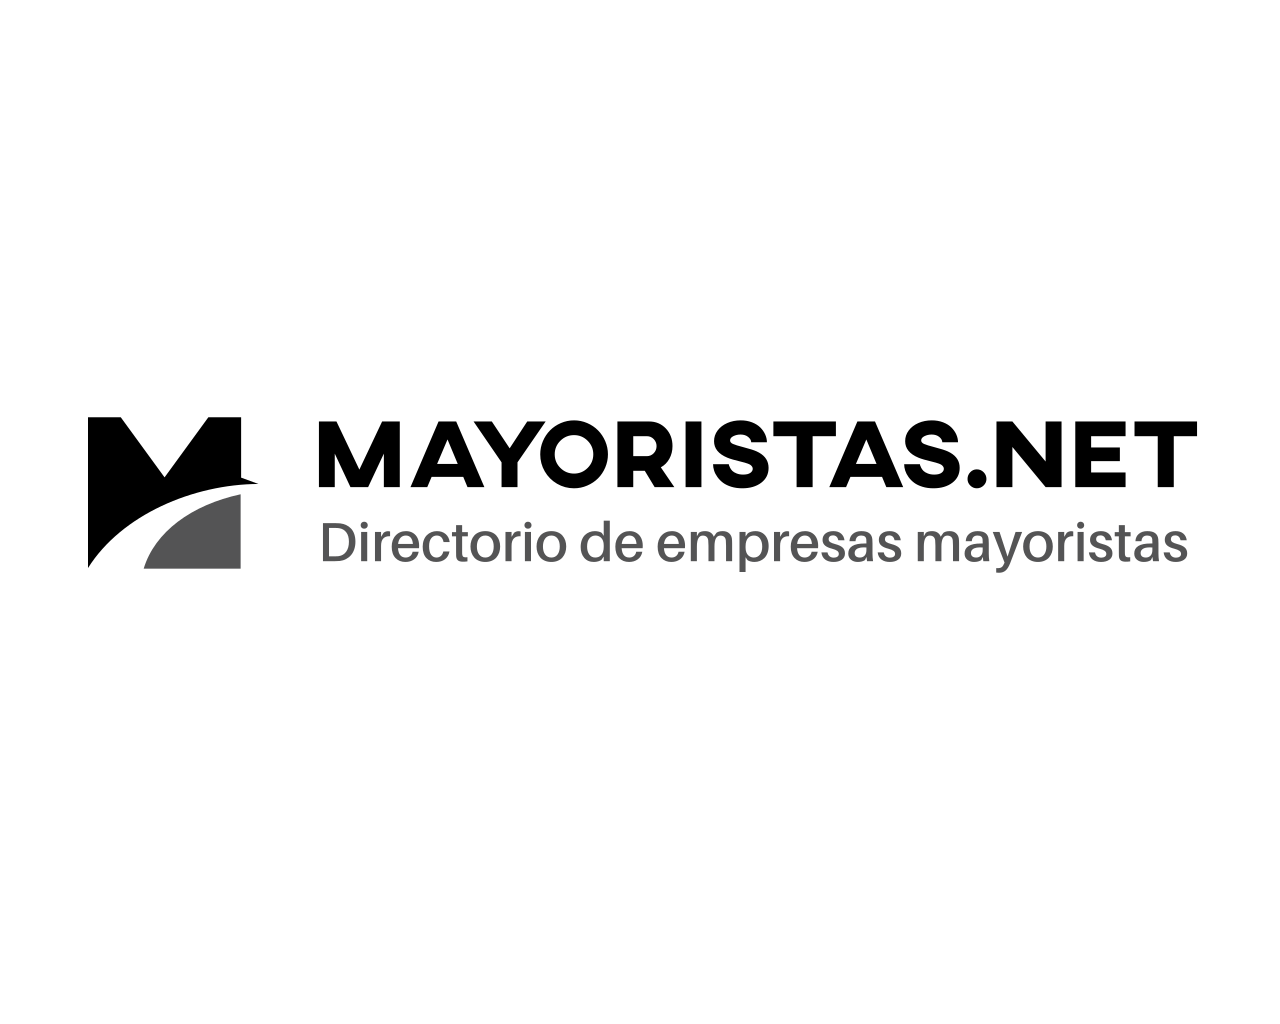 (c) Mayoristas.net